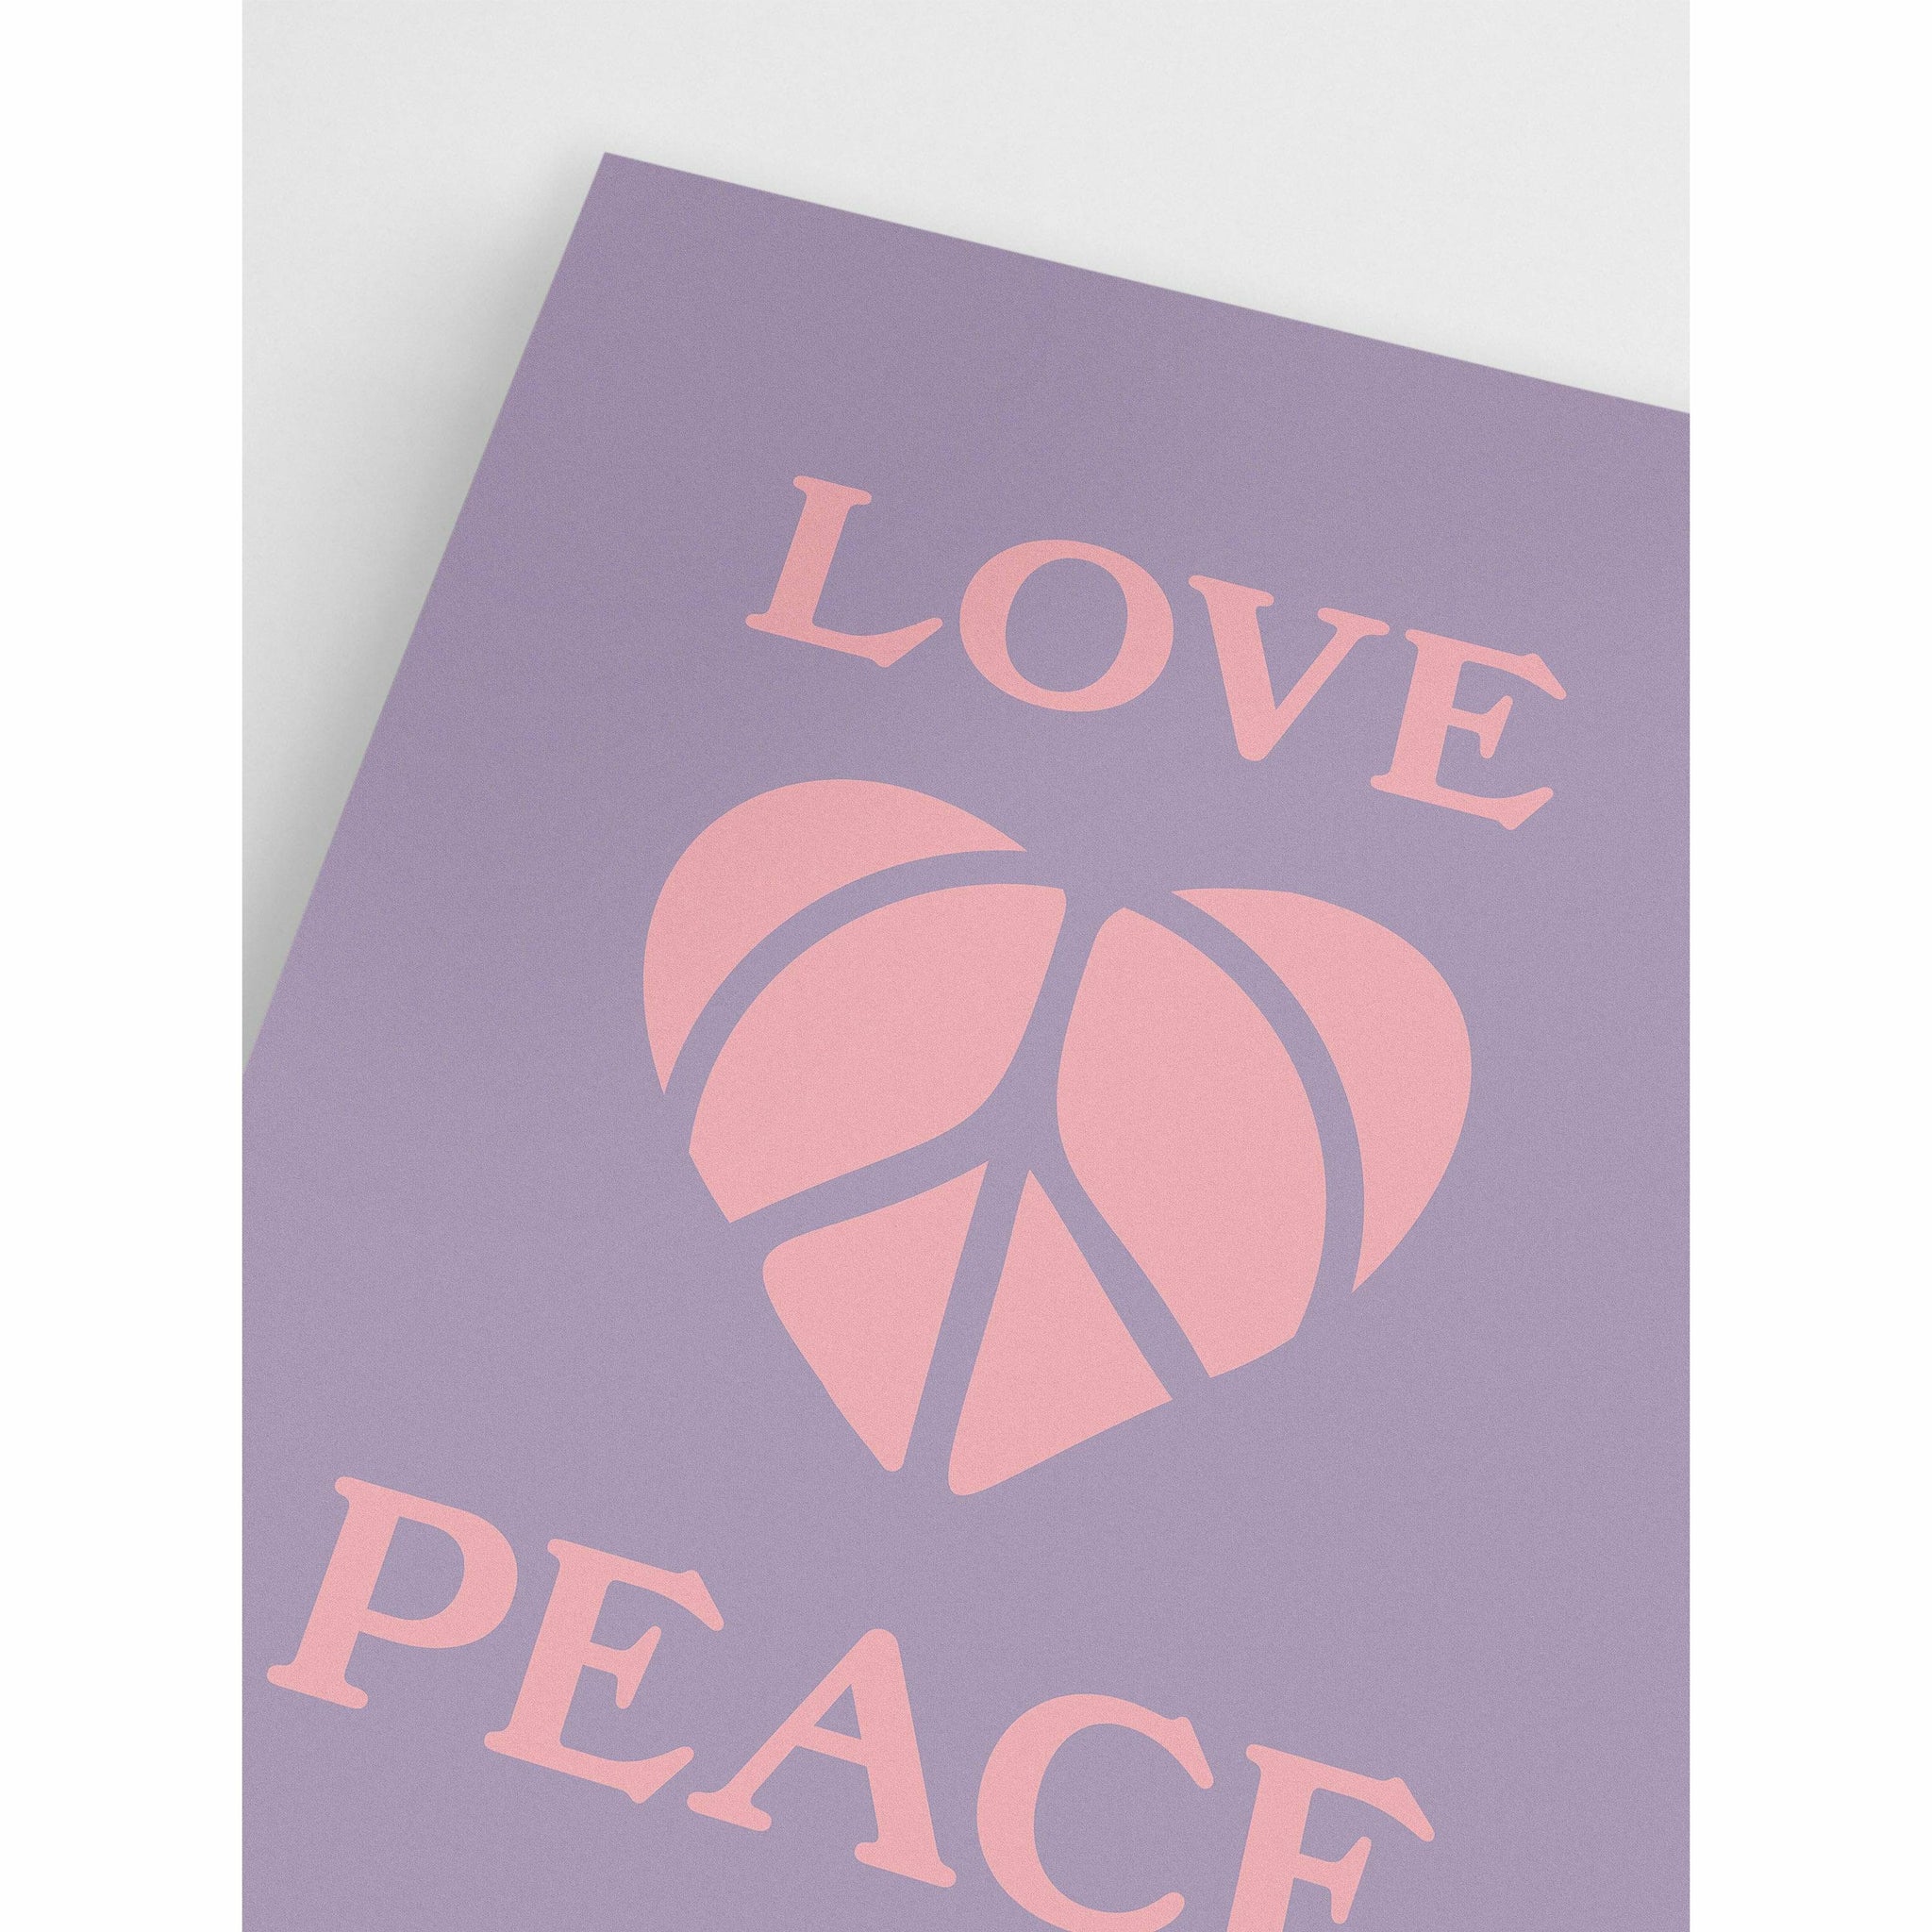 Love Peace Heart Digital poster